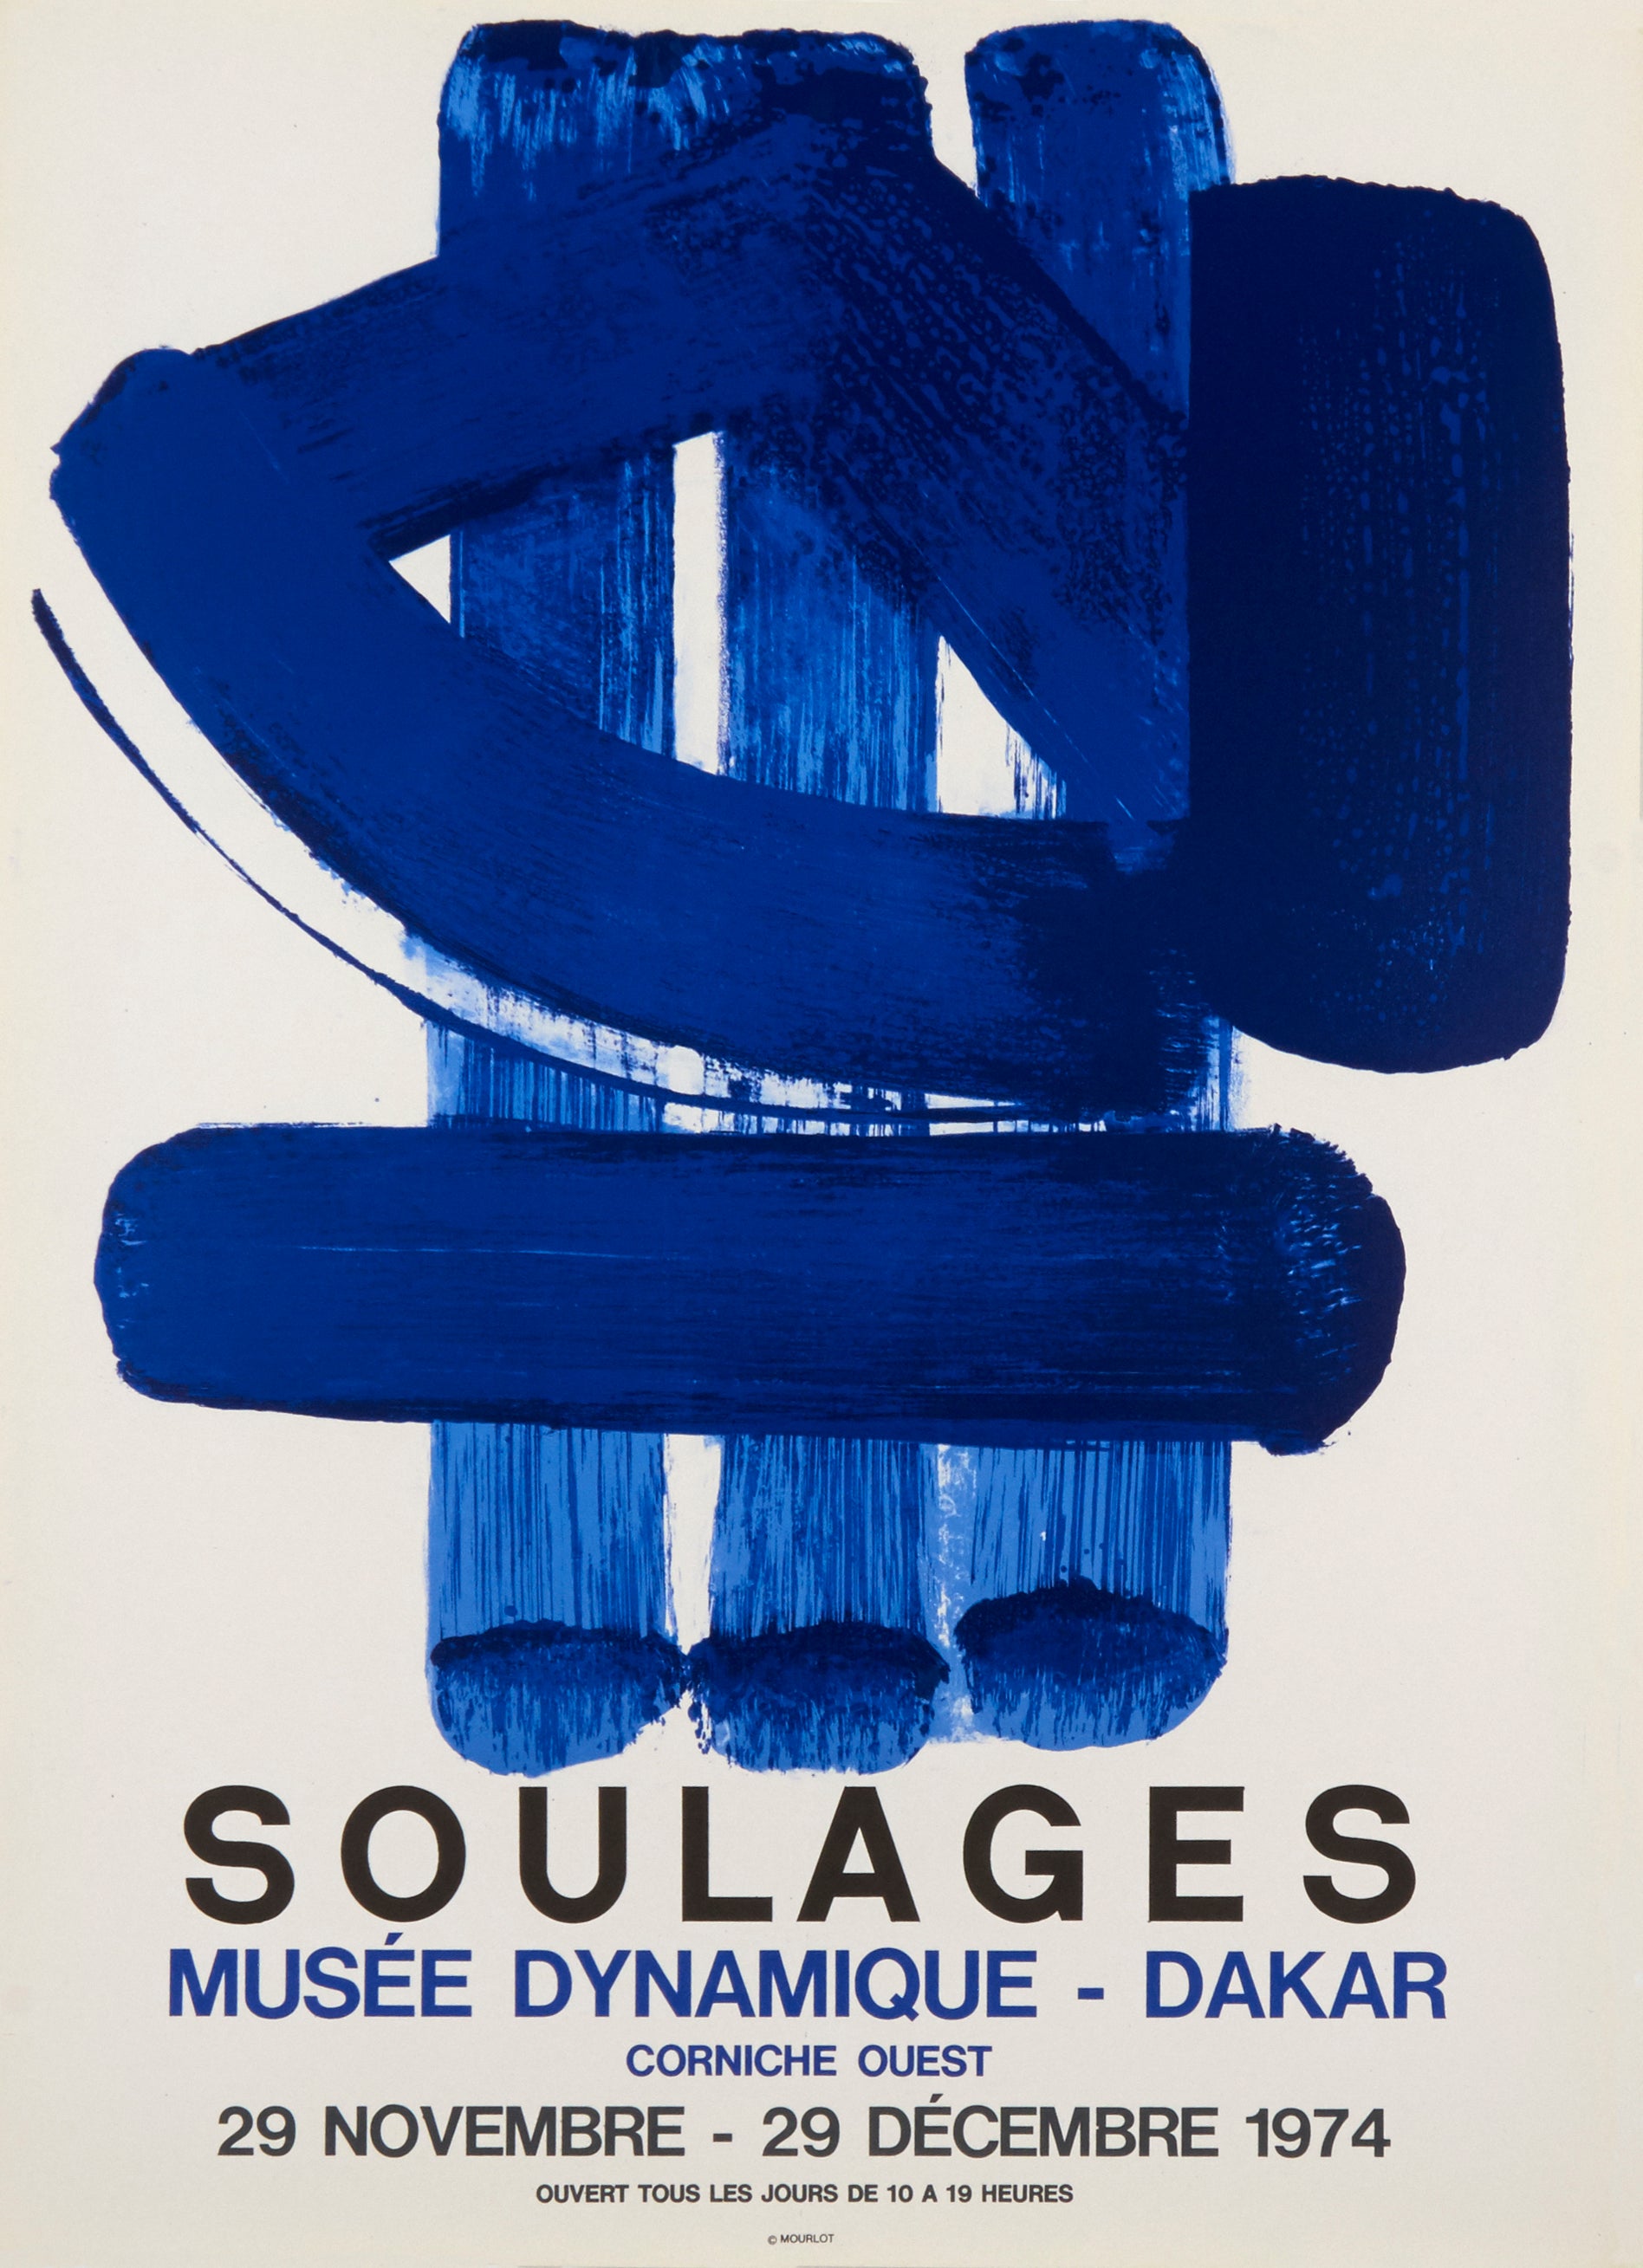 Musee Dynamique-Dakar by Pierre Soulages, 1974 - Mourlot Editions - Fine_Art - Poster - Lithograph - Wall Art - Vintage - Prints - Original